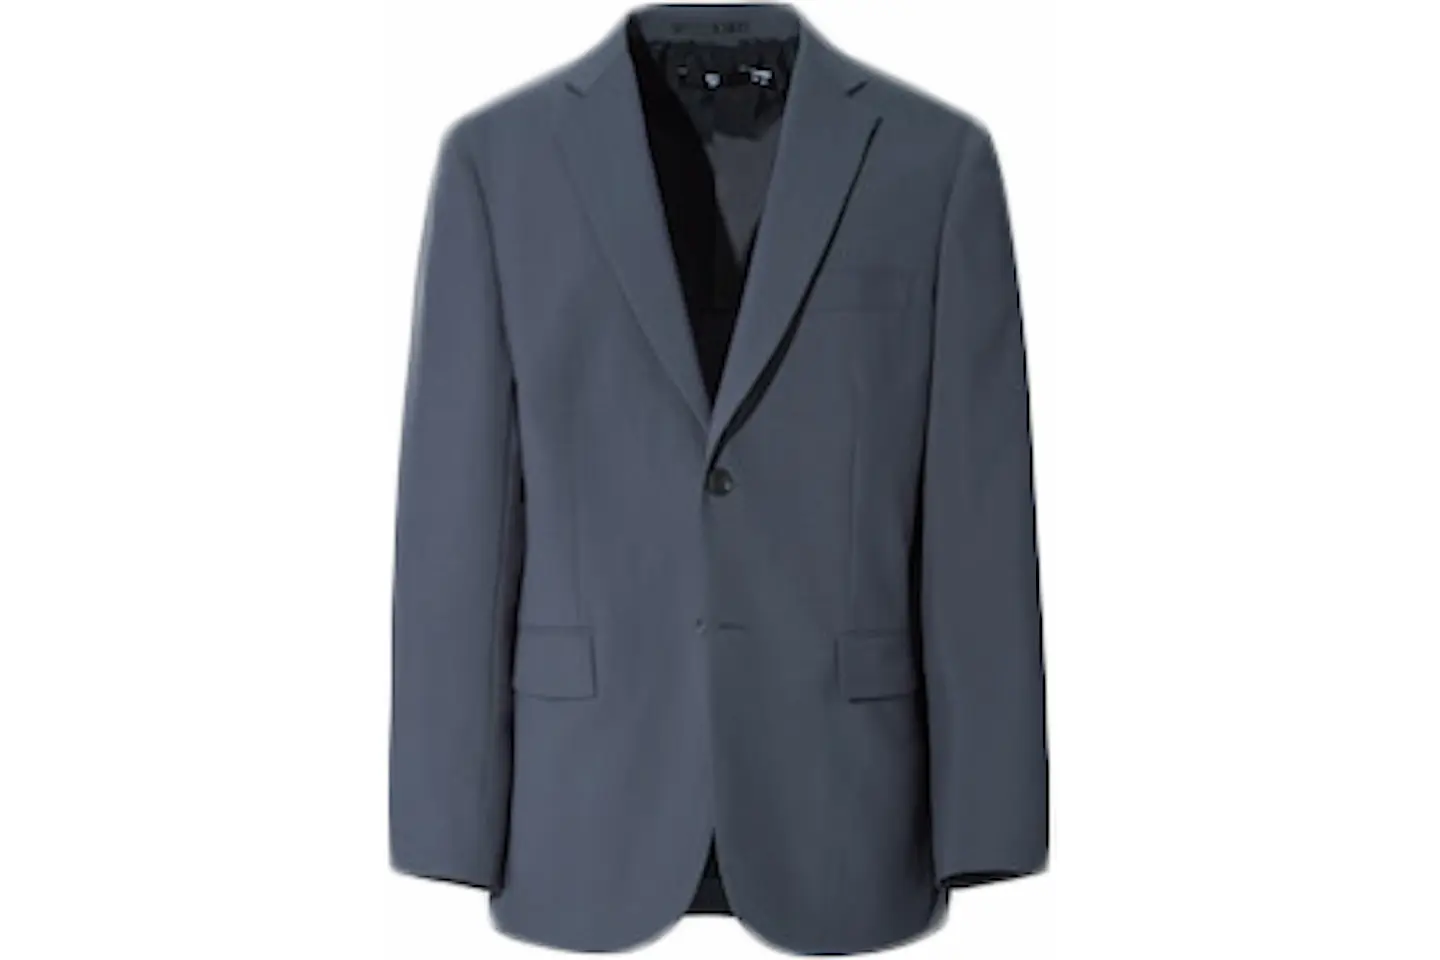 Uniqlo x Jil Sander Tailored Jacket Grey Men's - SS21 - US